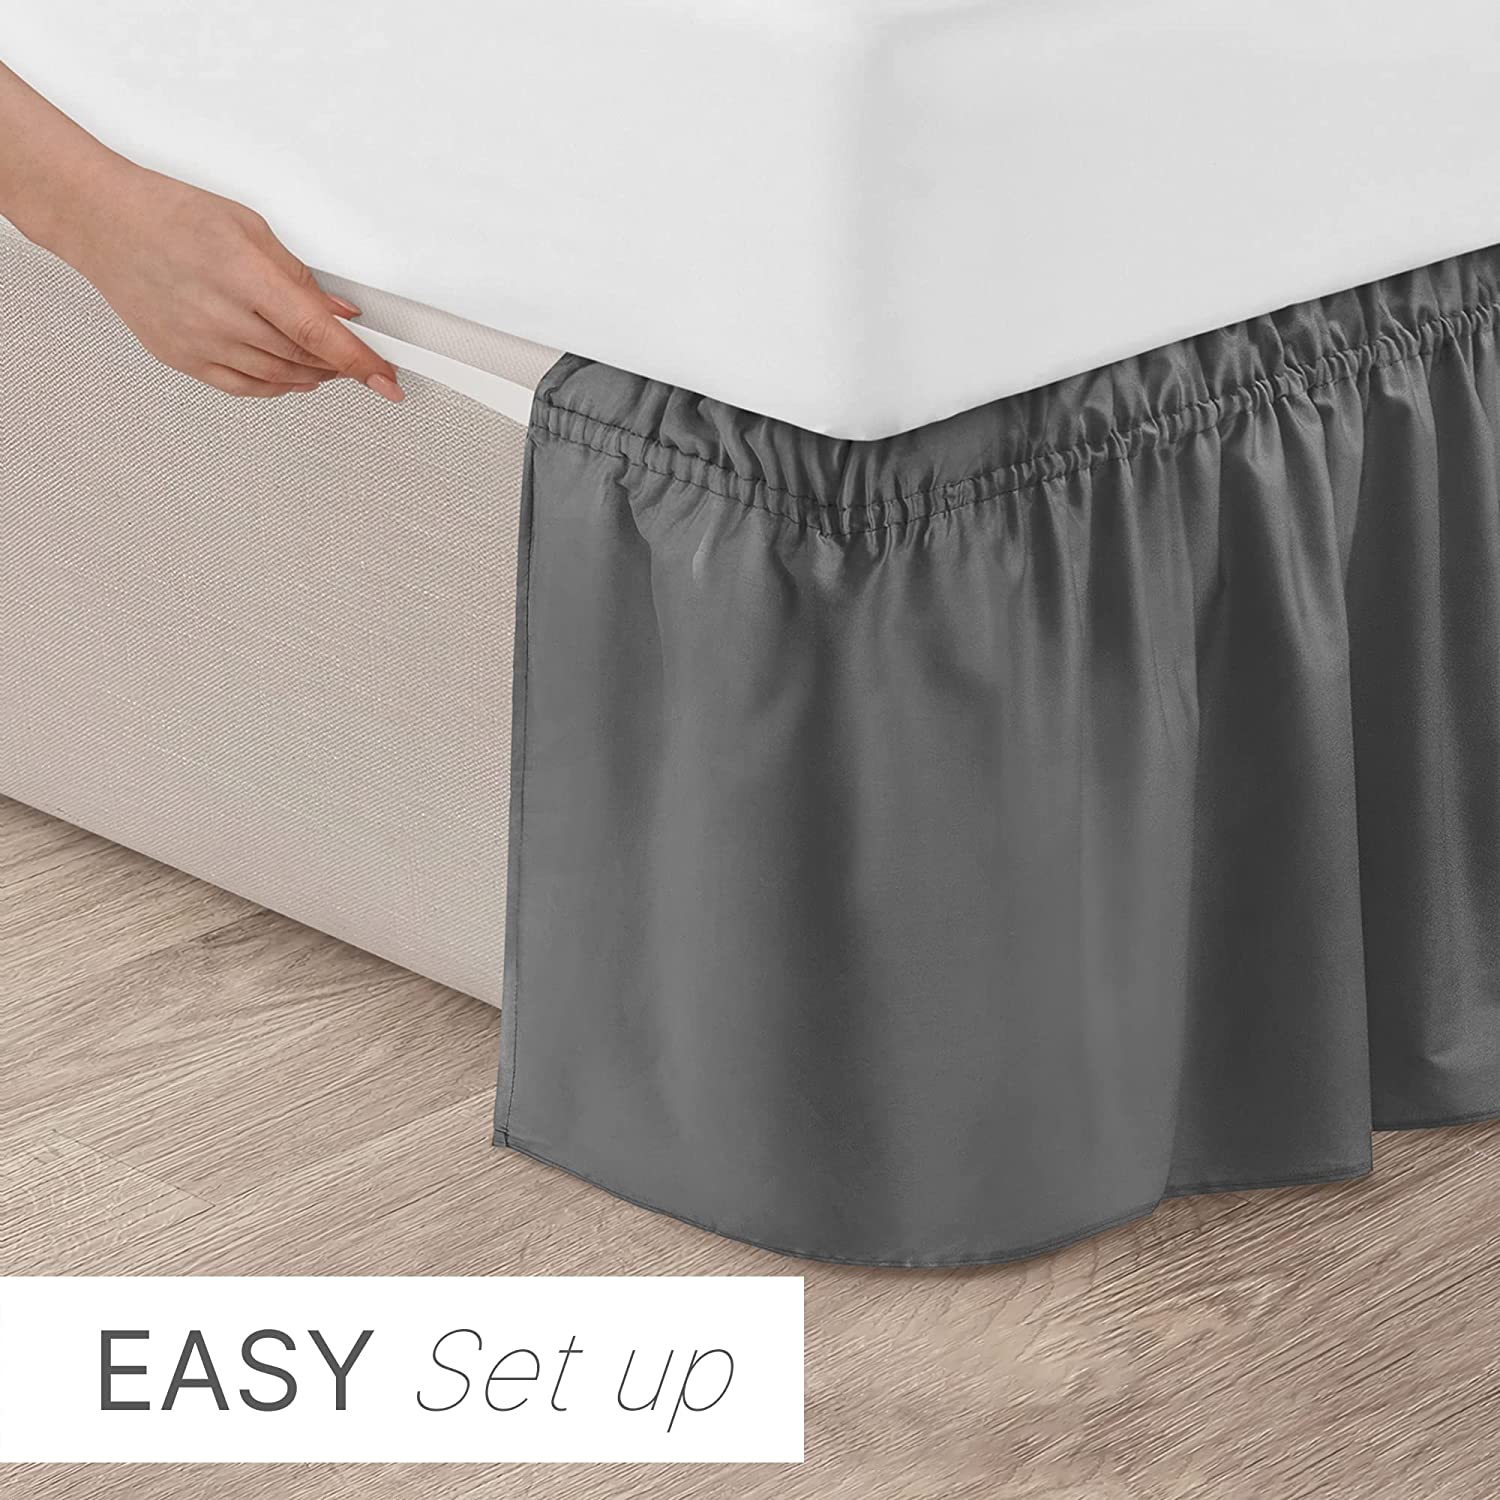 Ruffled Elastic Wrap Around Bedskirt 15 Inch Drop - Gray